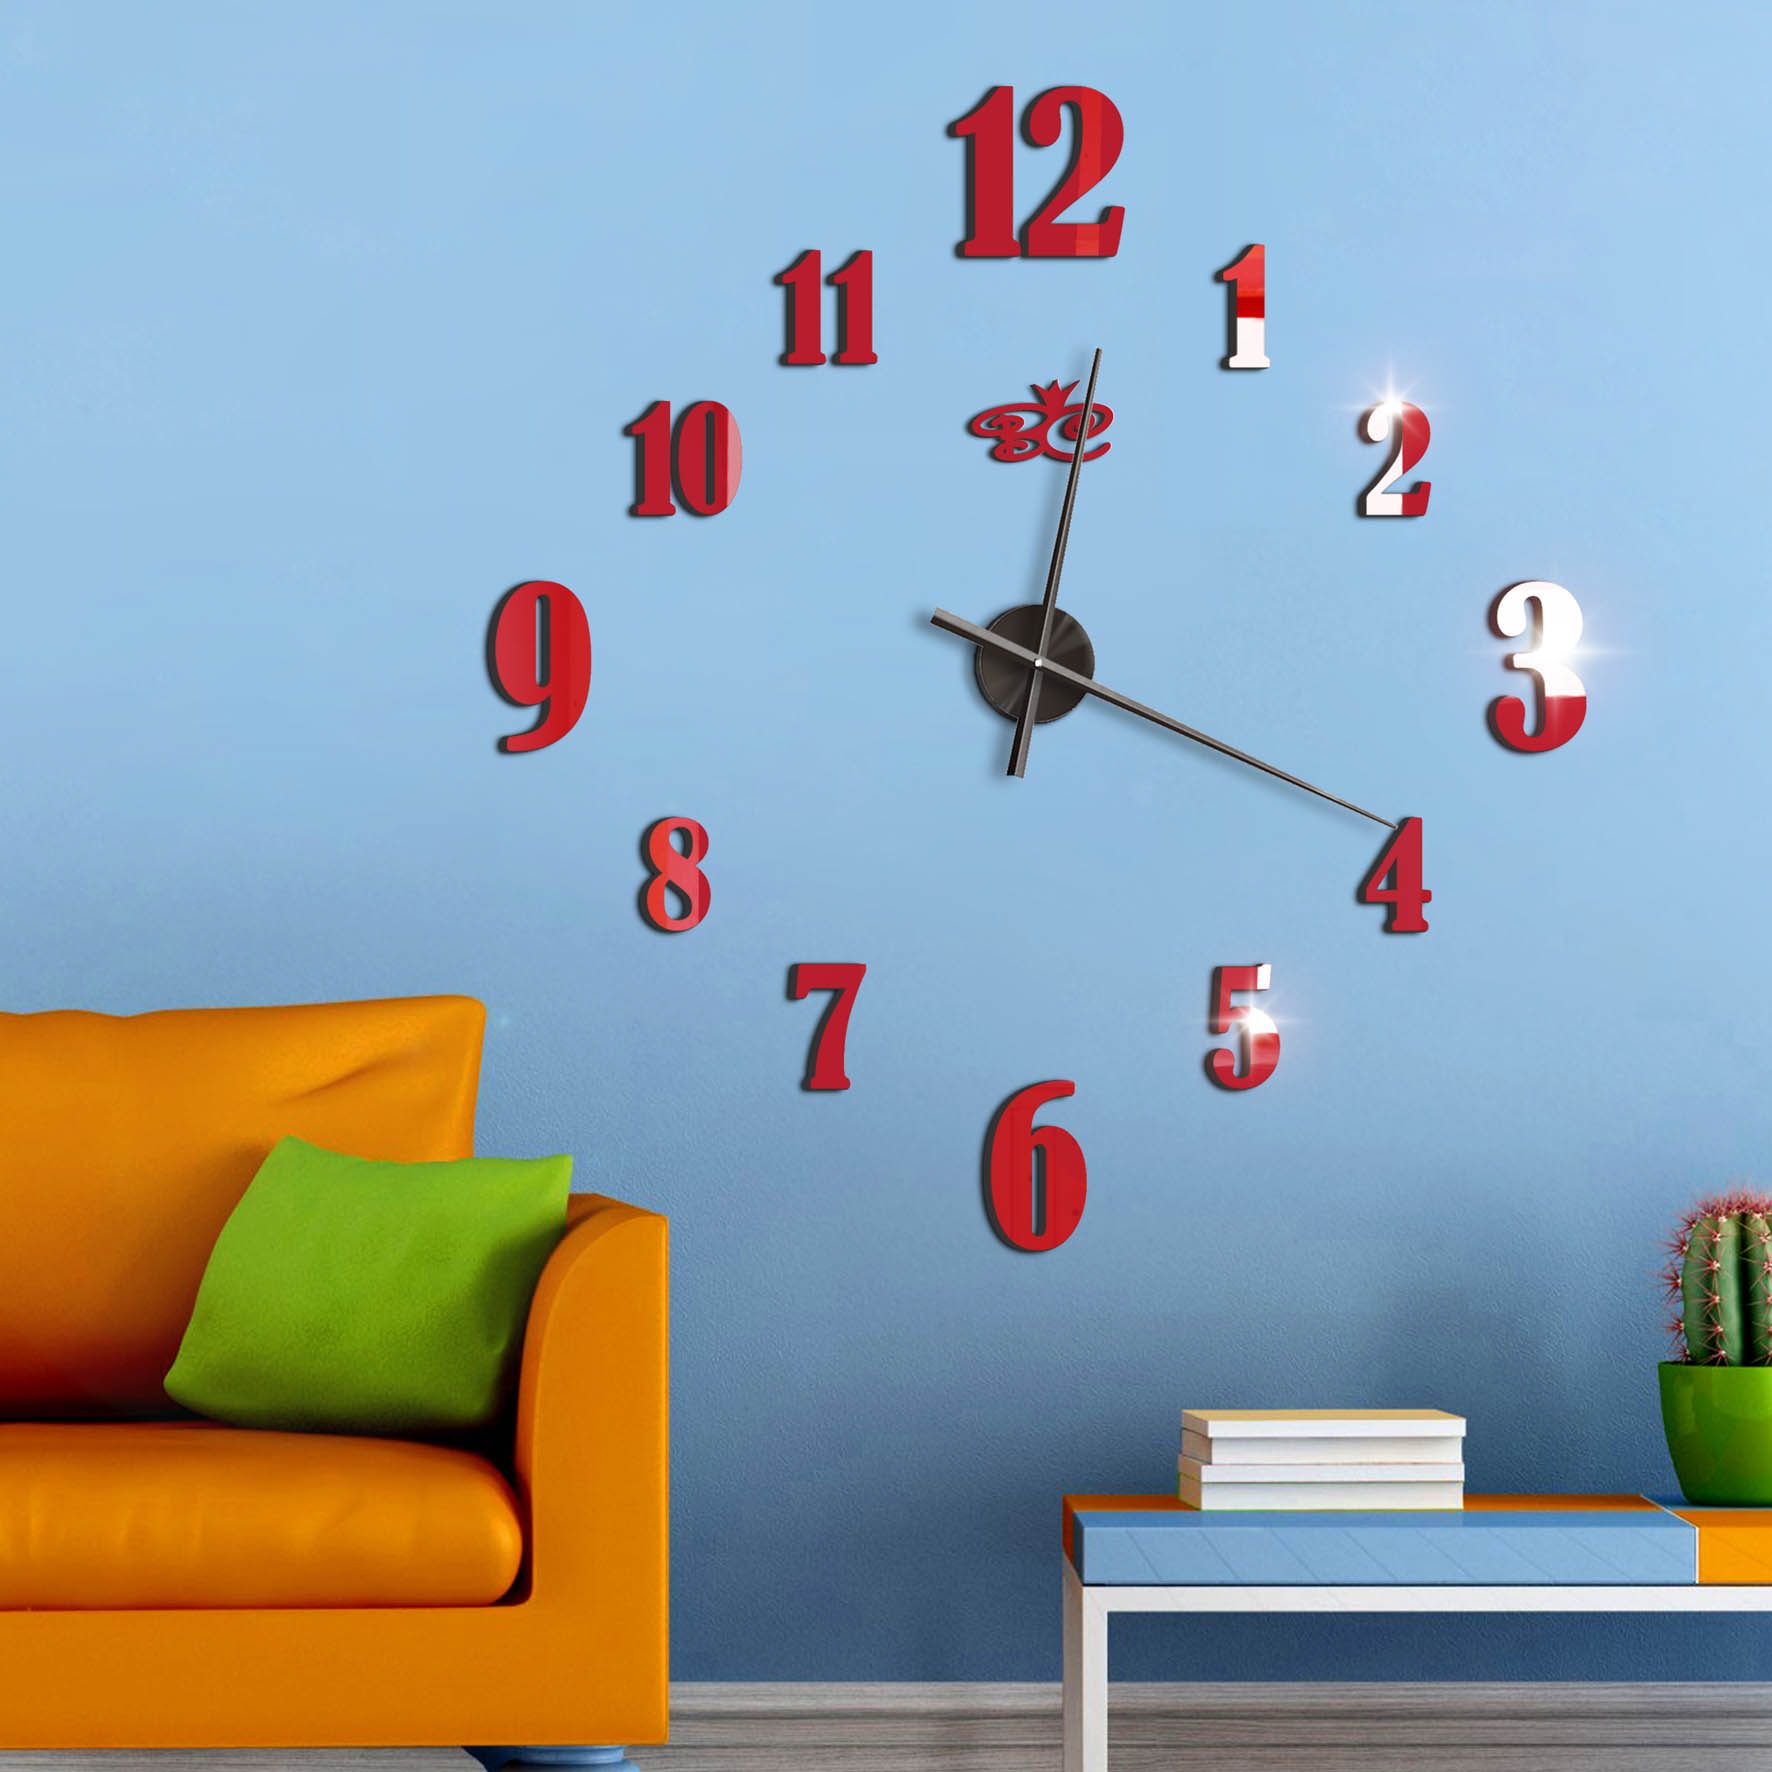 Настенные часы звук. Настенные часы 3d zh034. Дизайнерские часы на стену. Часы в детскую комнату. Необычные часы на стену.